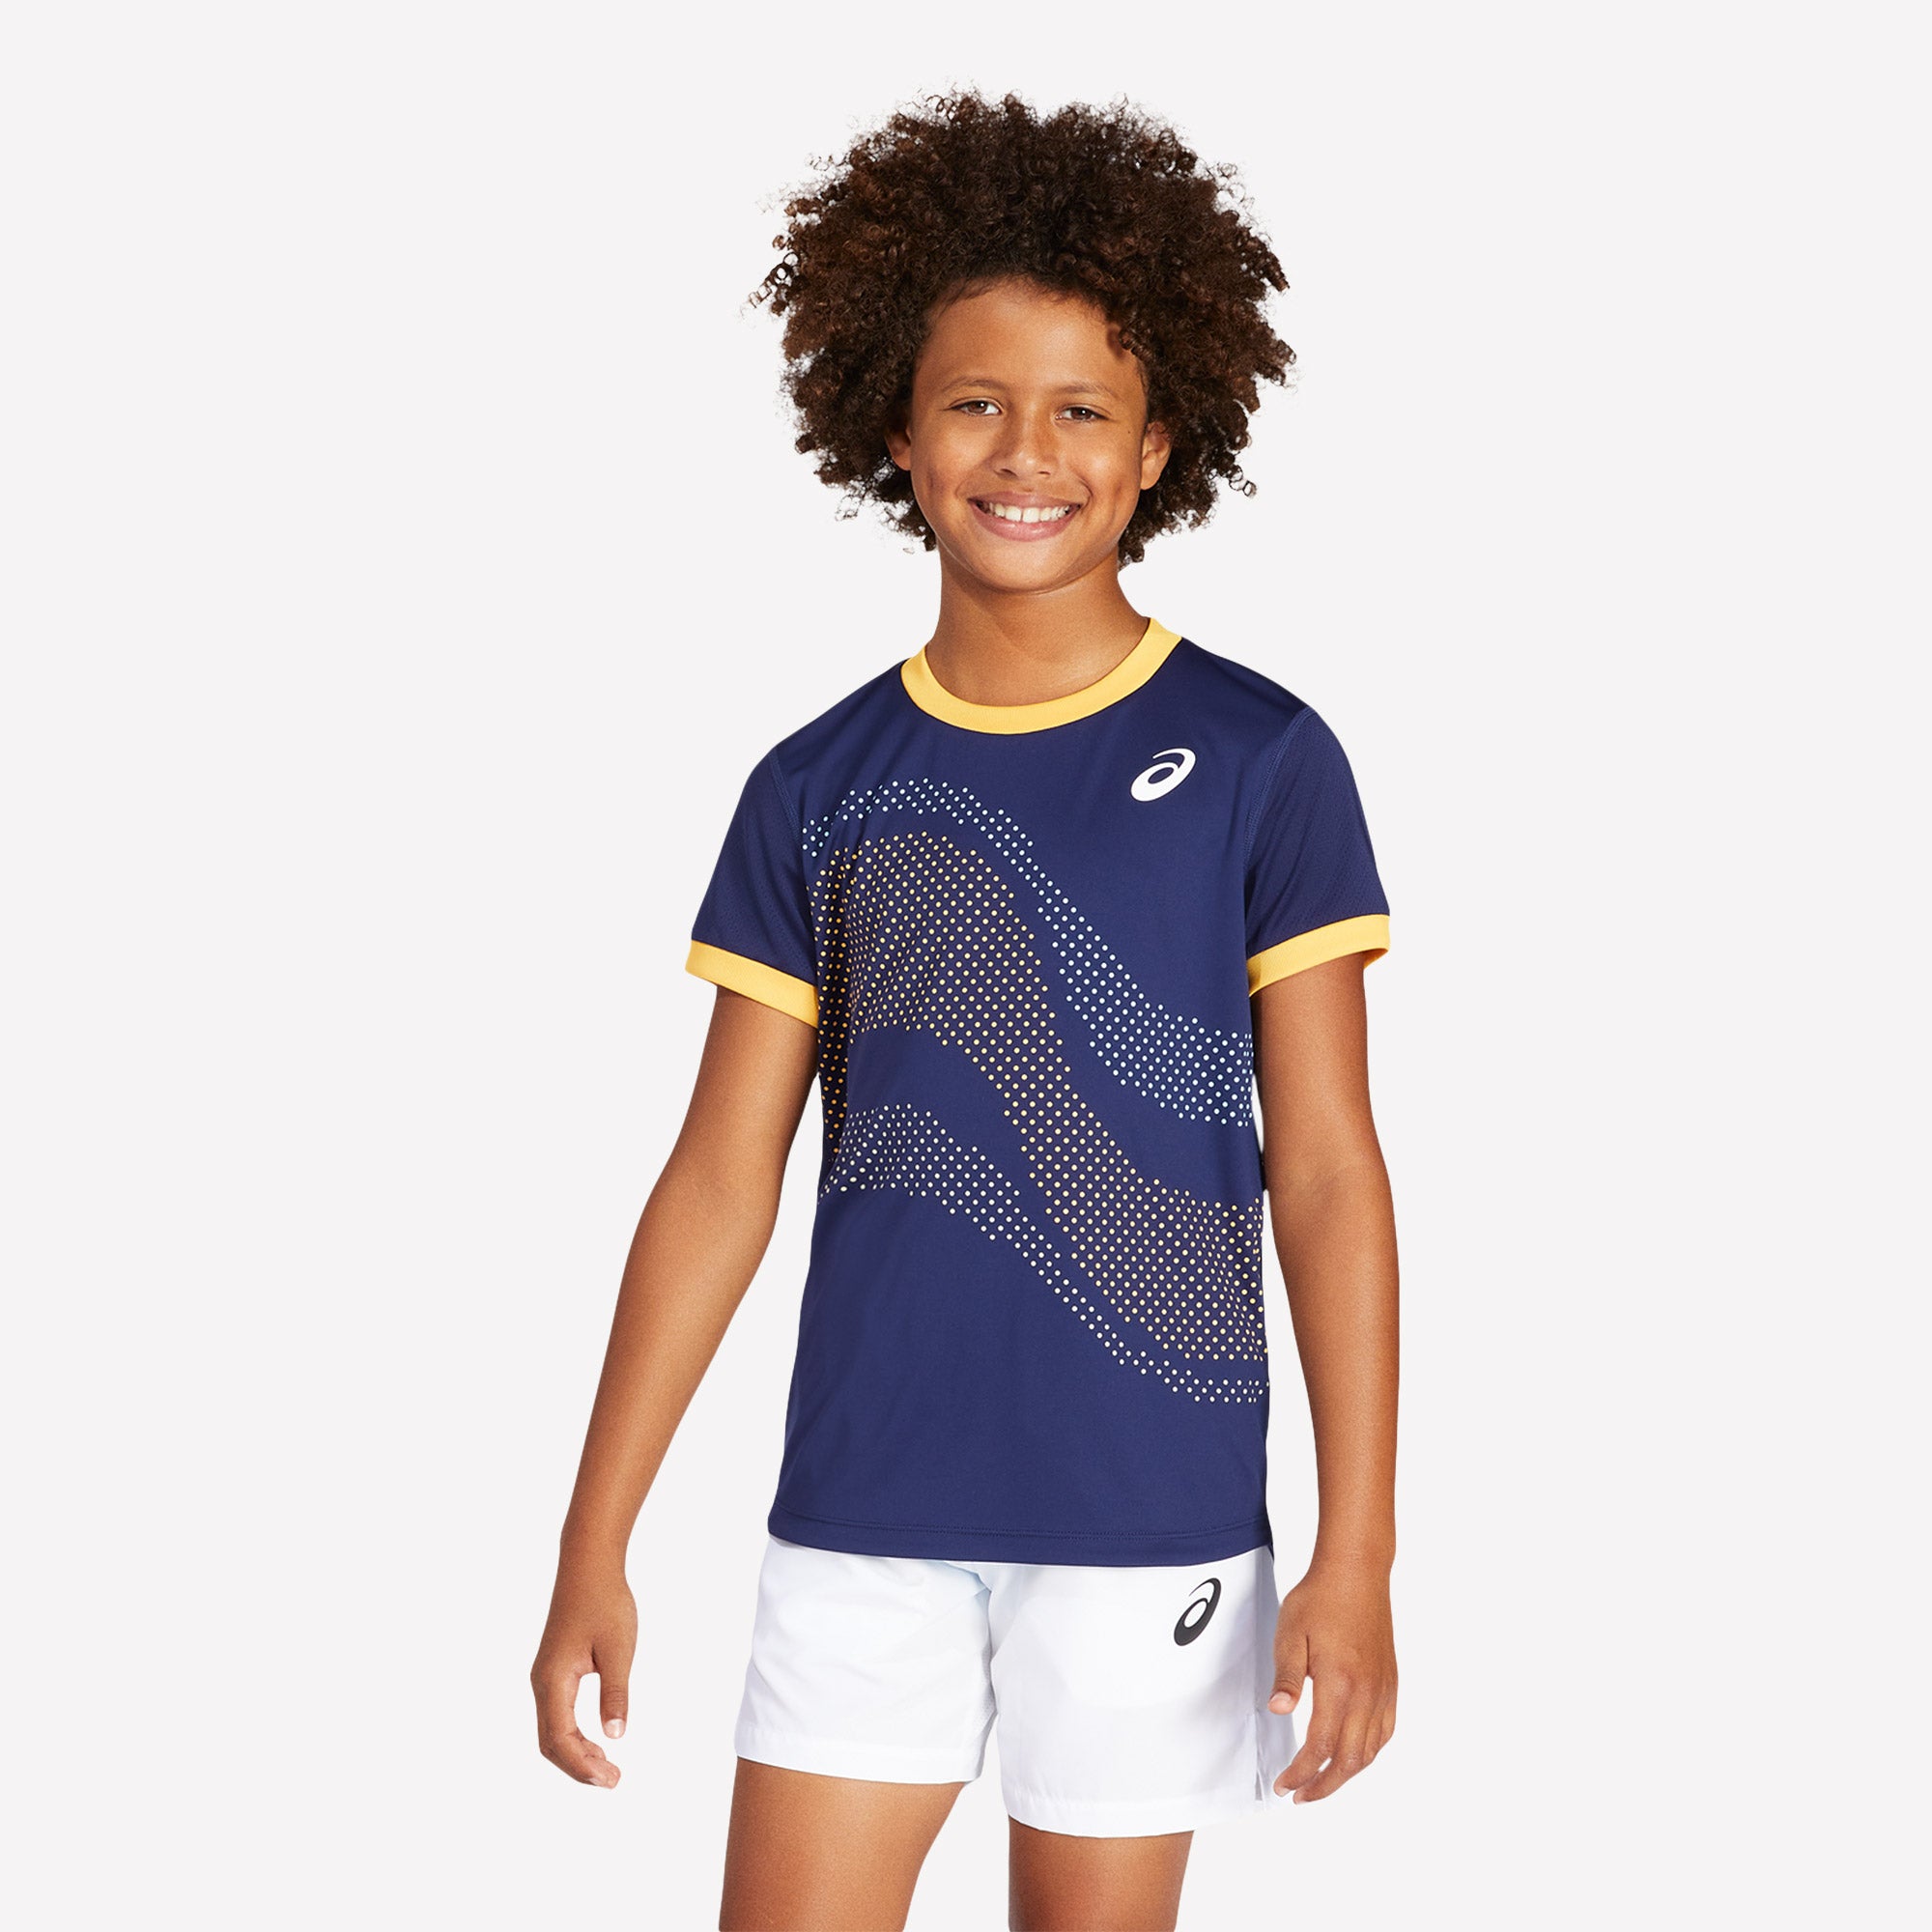 ASICS Match Boys' Graphic Tennis Shirt Blue (1)